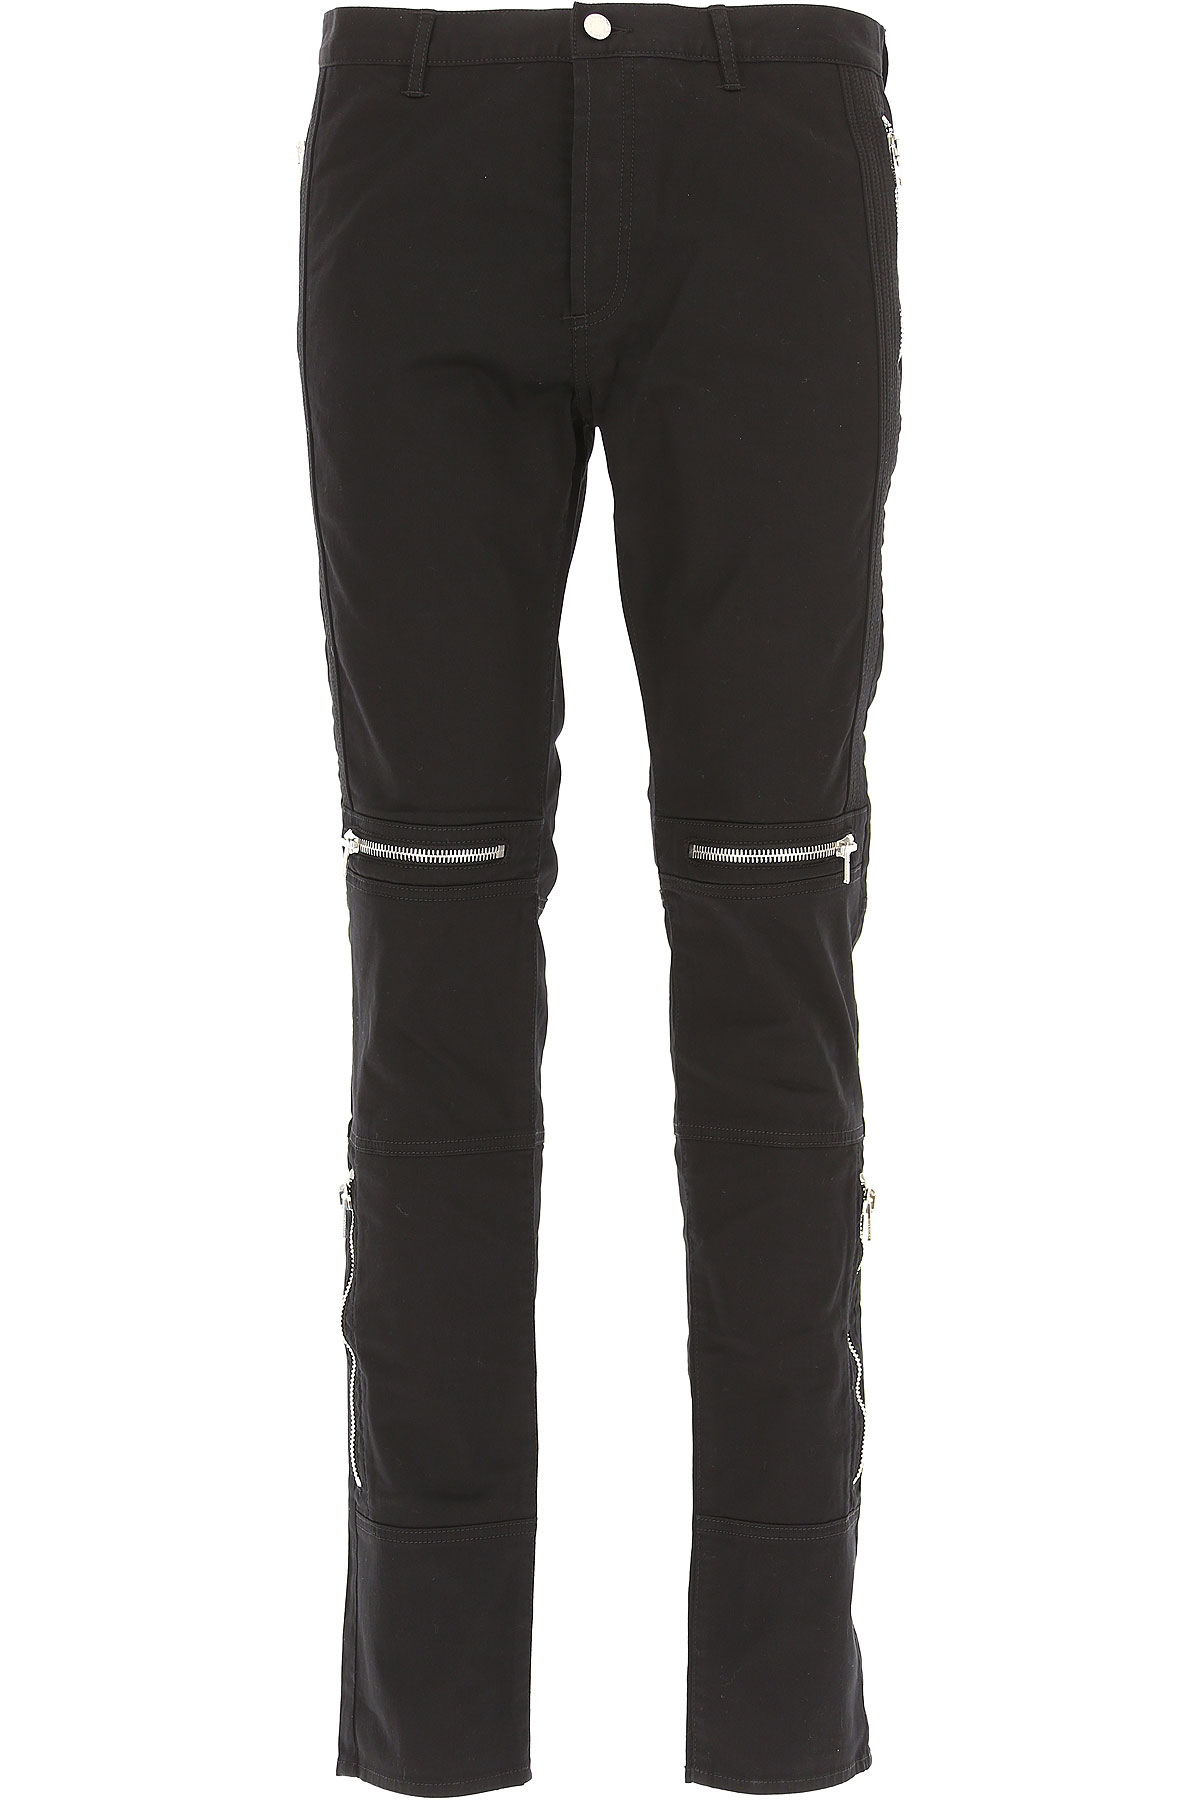 Givenchy Pantalon Homme, Noir, Coton, 2017, 48 50